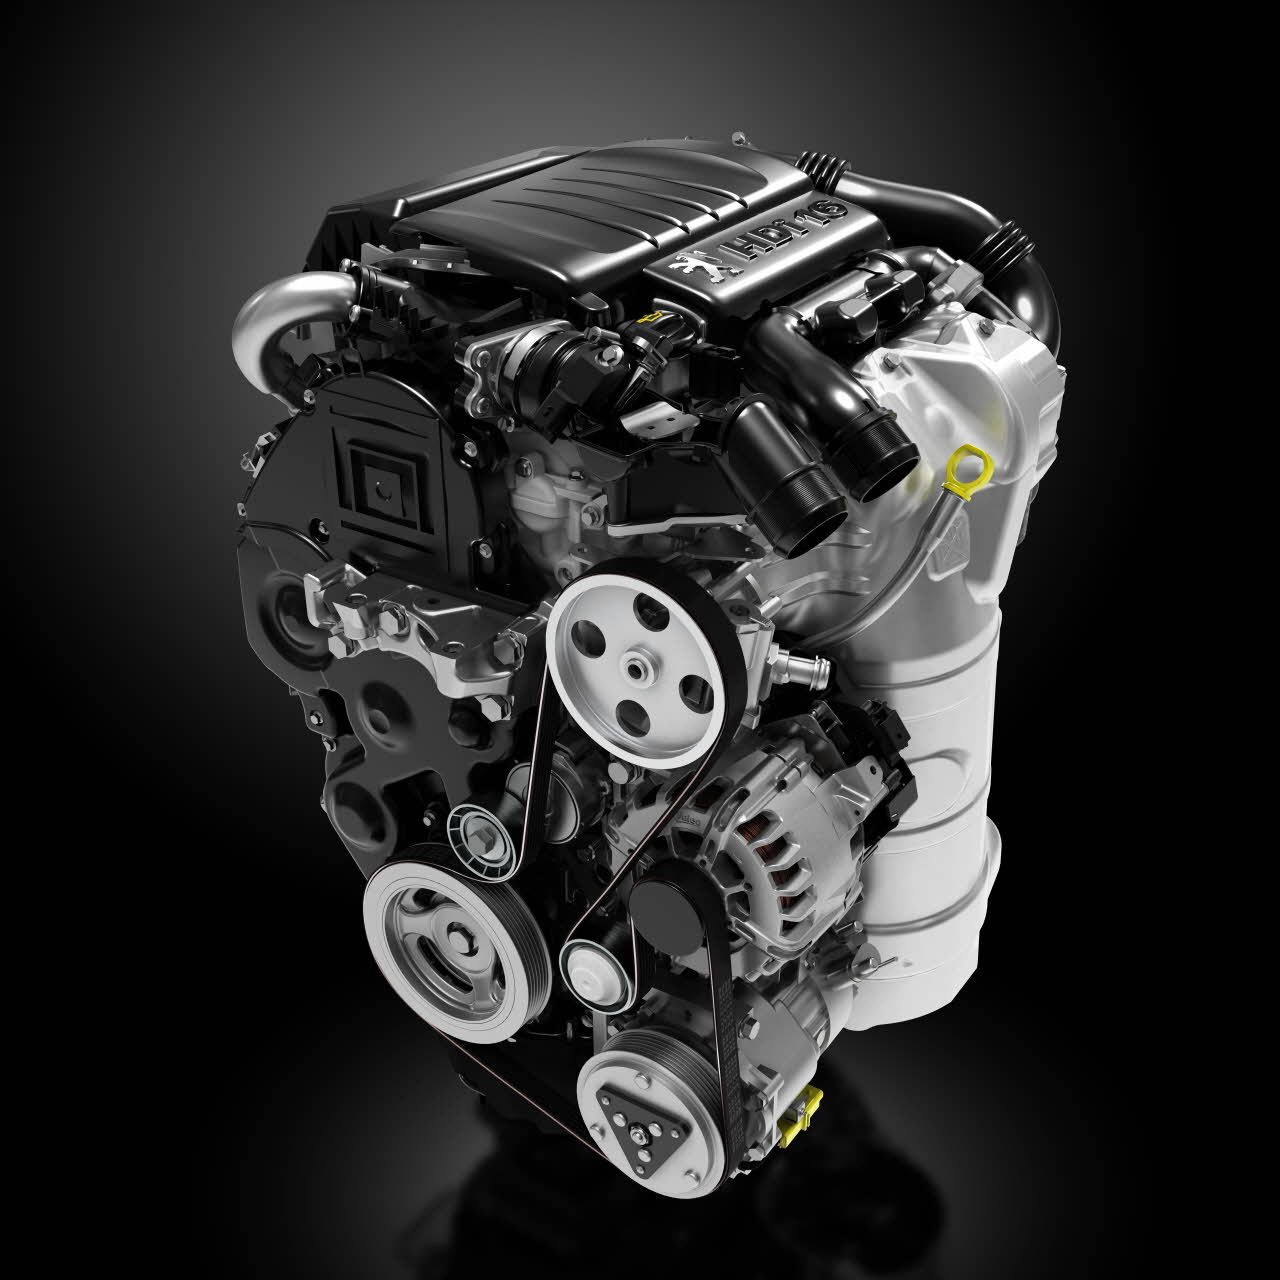 Пежо 301 двигатель. Peugeot 301 1.6 VTI. Двигатель 1.6 HDI Пежо. Пежо 301 двигатель 1.6. Пежо 301 дизель двигатель.